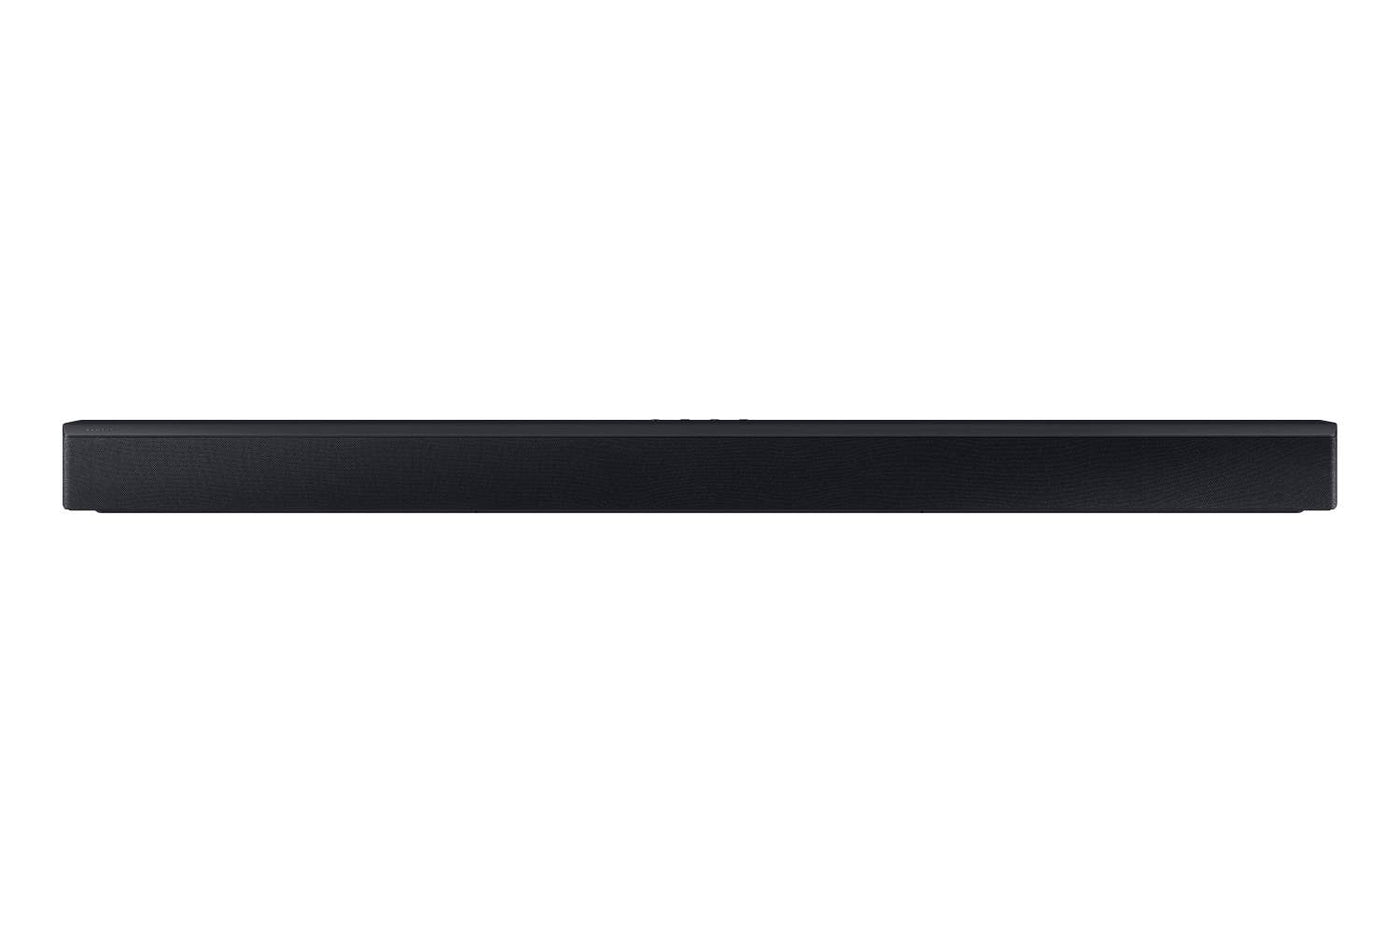 Samsung C Series 2.1ch Soundbar with Wireless Sub - HW-C450/ZC